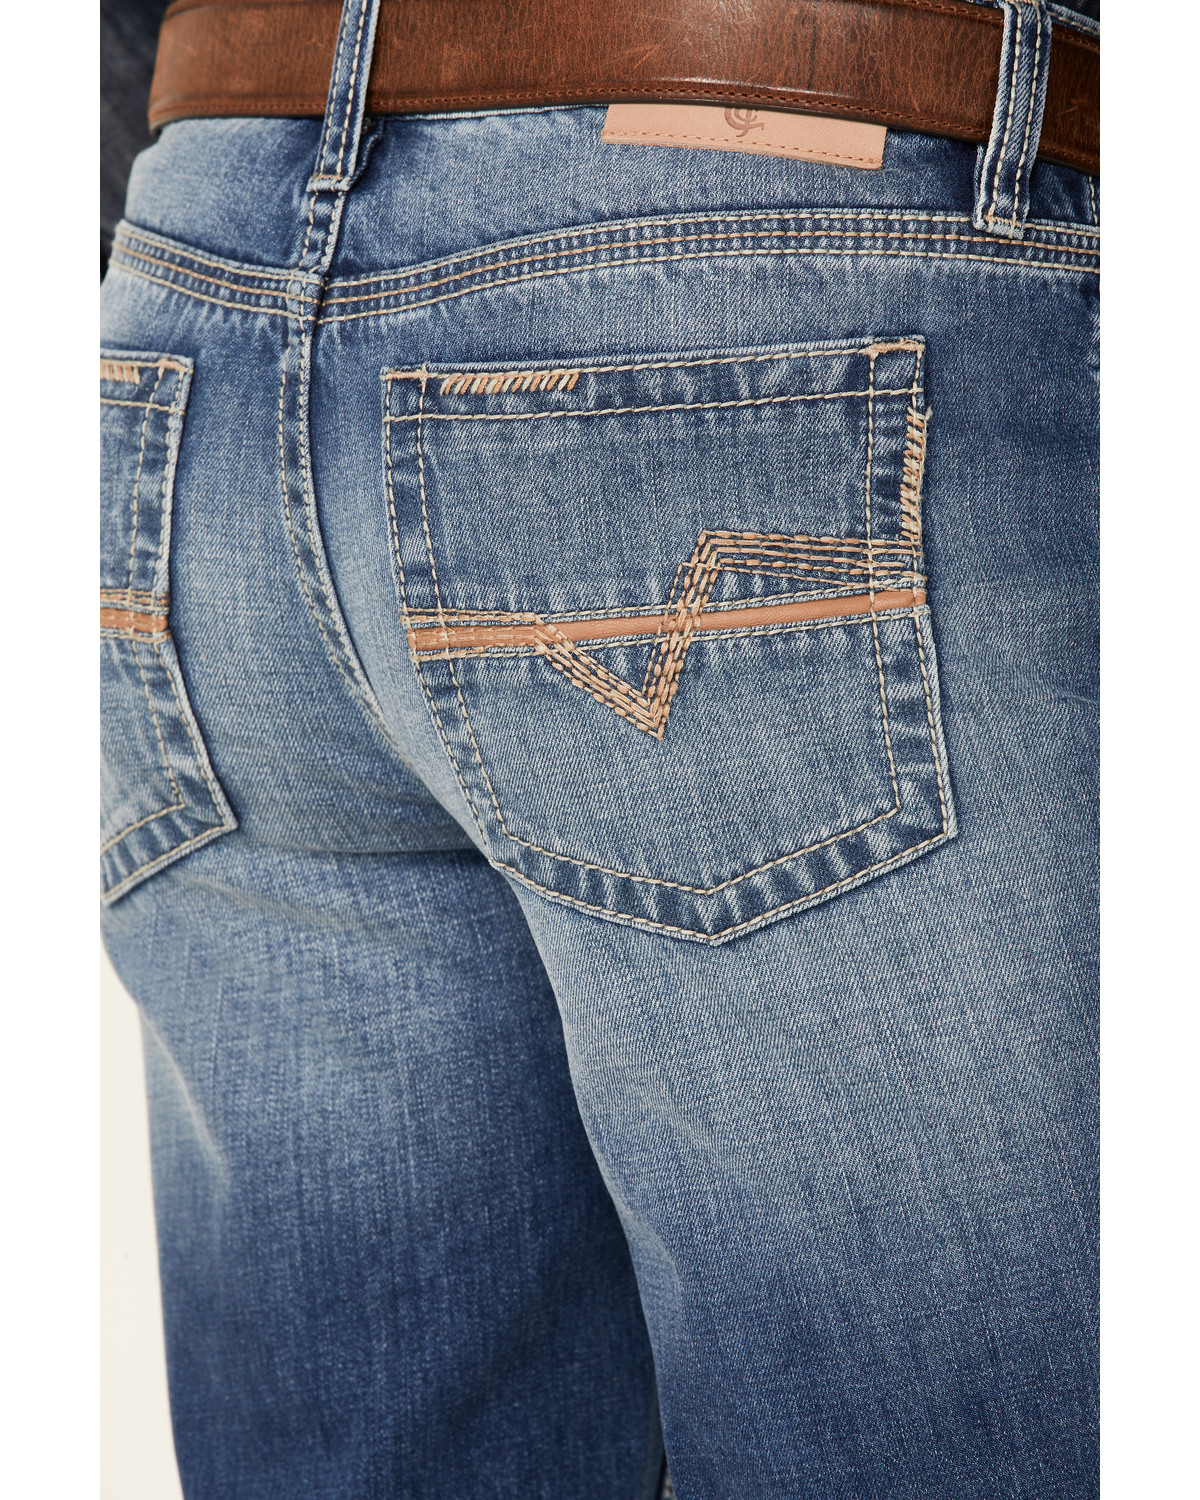 Cody James Core Men's Great Plains Dark Rigid Slim Straight Jeans ...